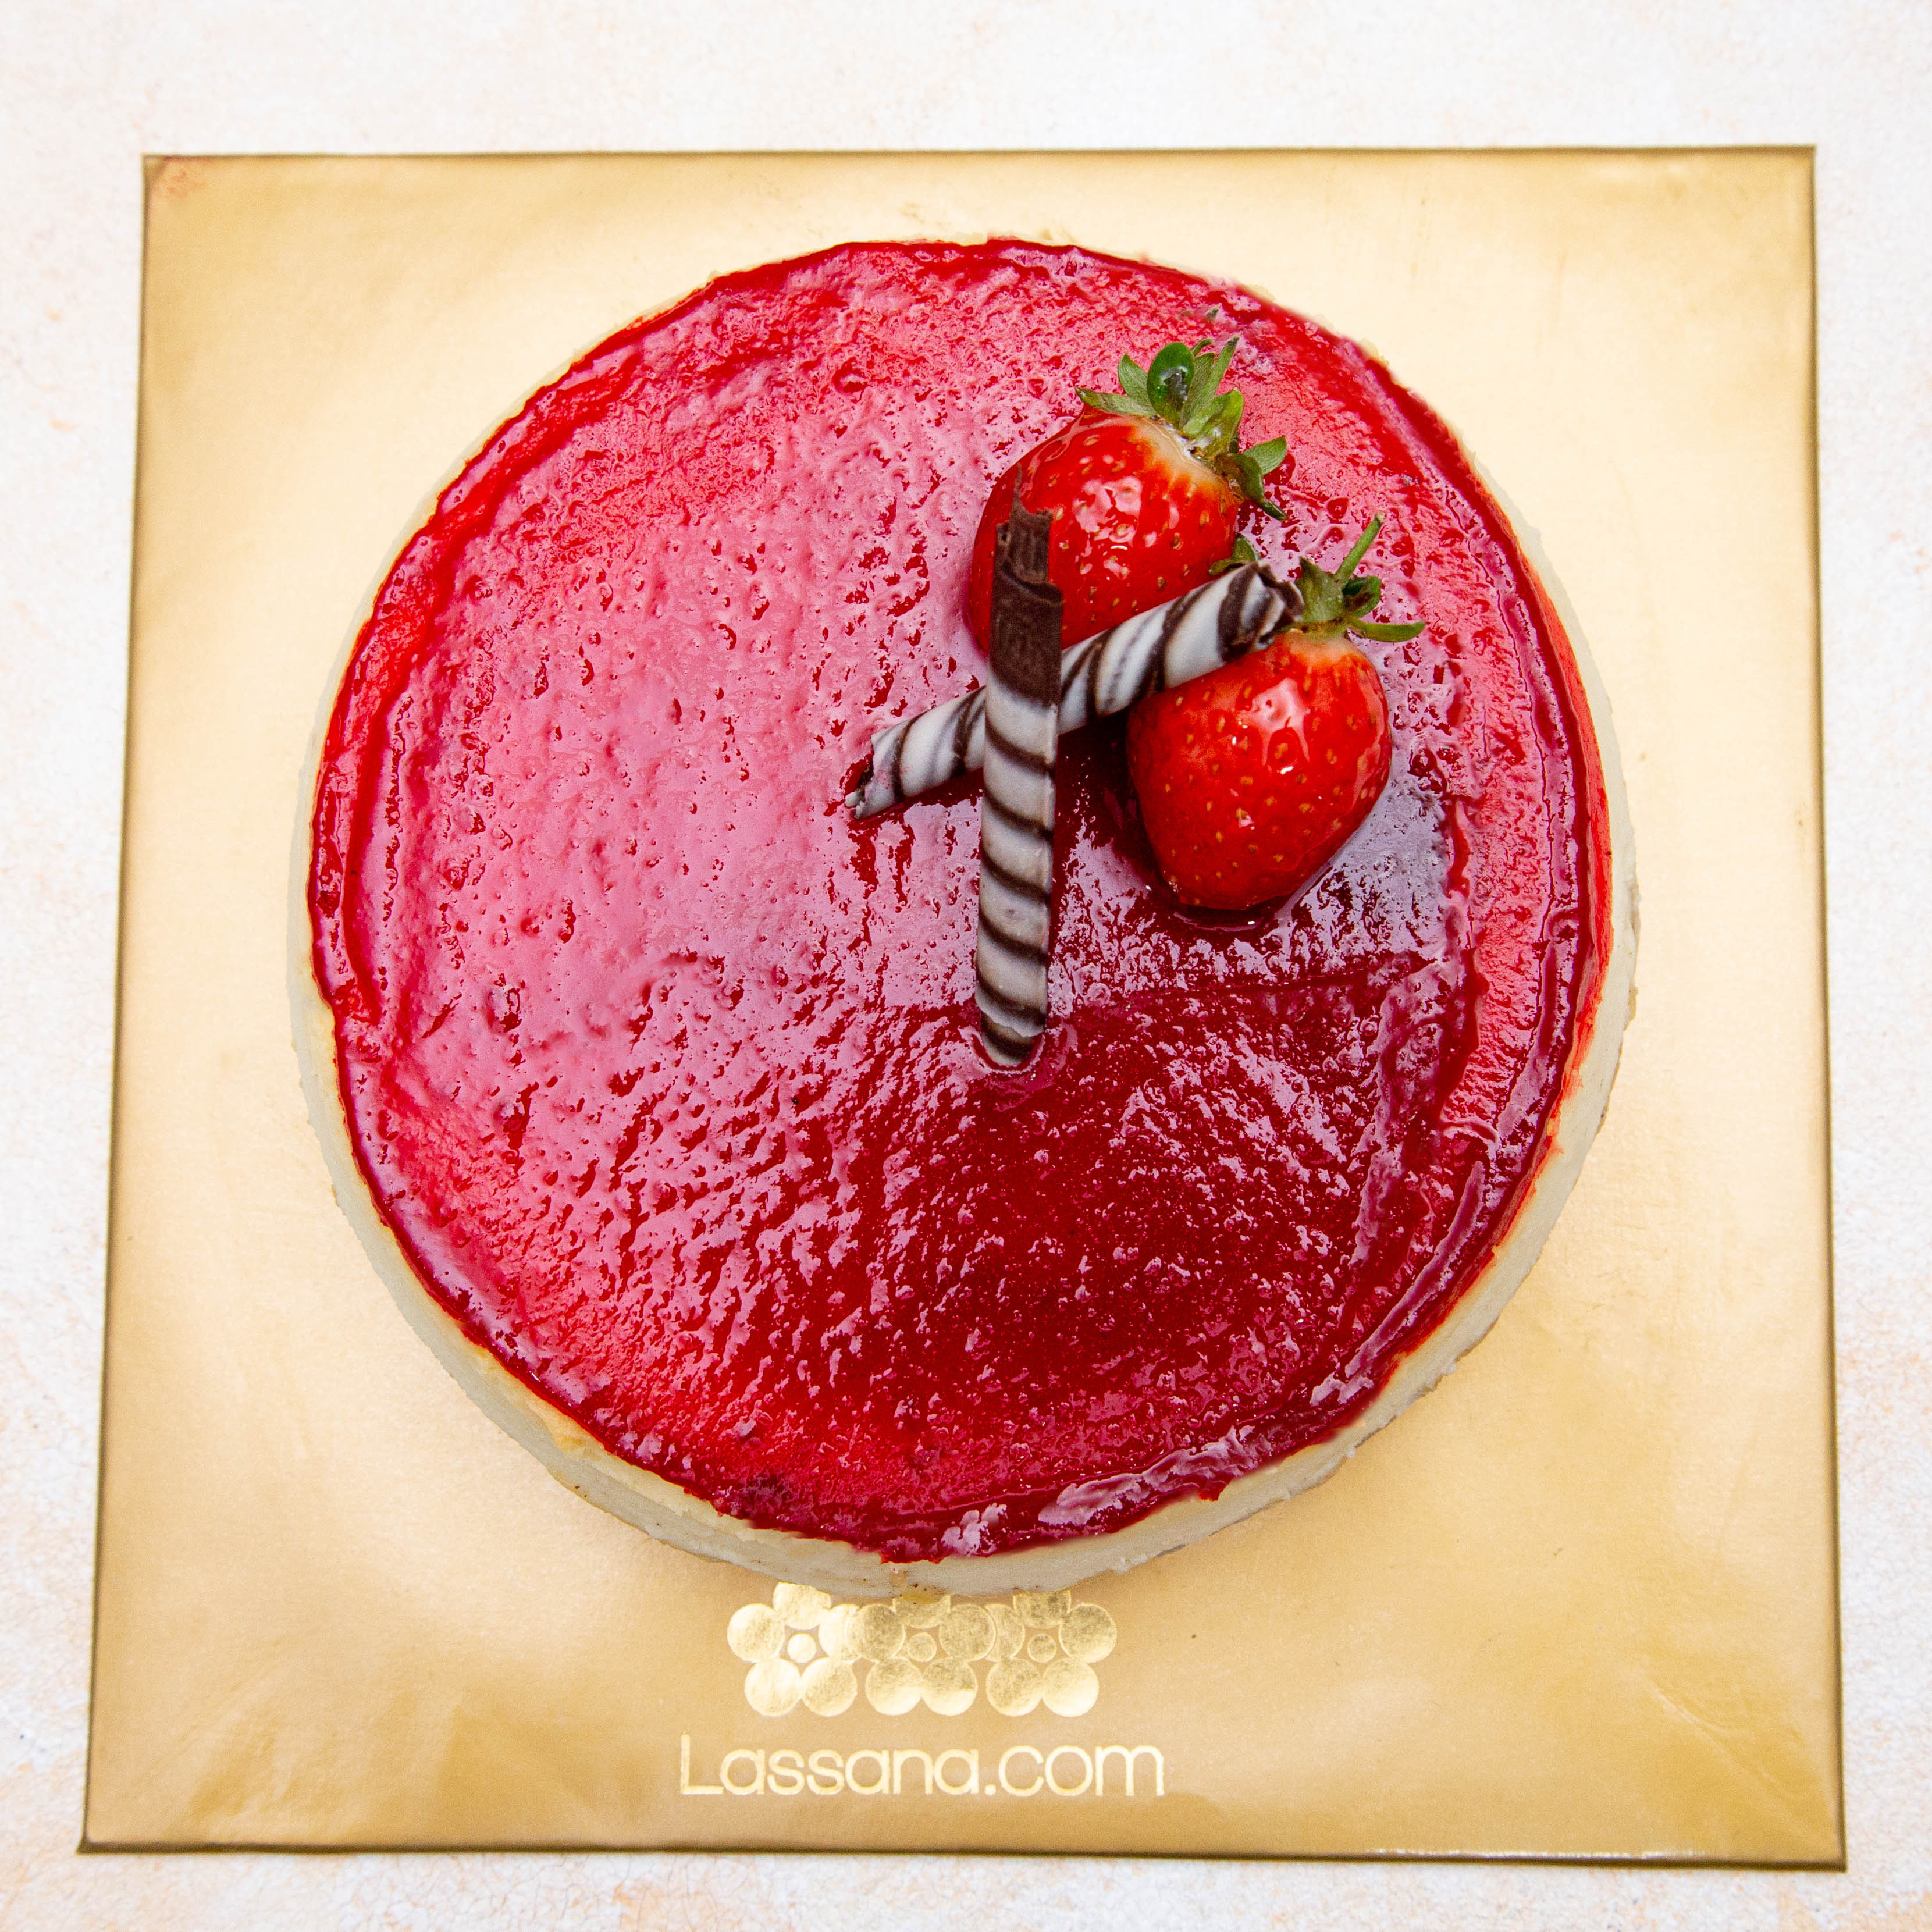 SEBASTIAN STRAWBERRY BAKED CHEESE CAKE - 500G( 1.1LBS ) - Lassana Cakes - in Sri Lanka